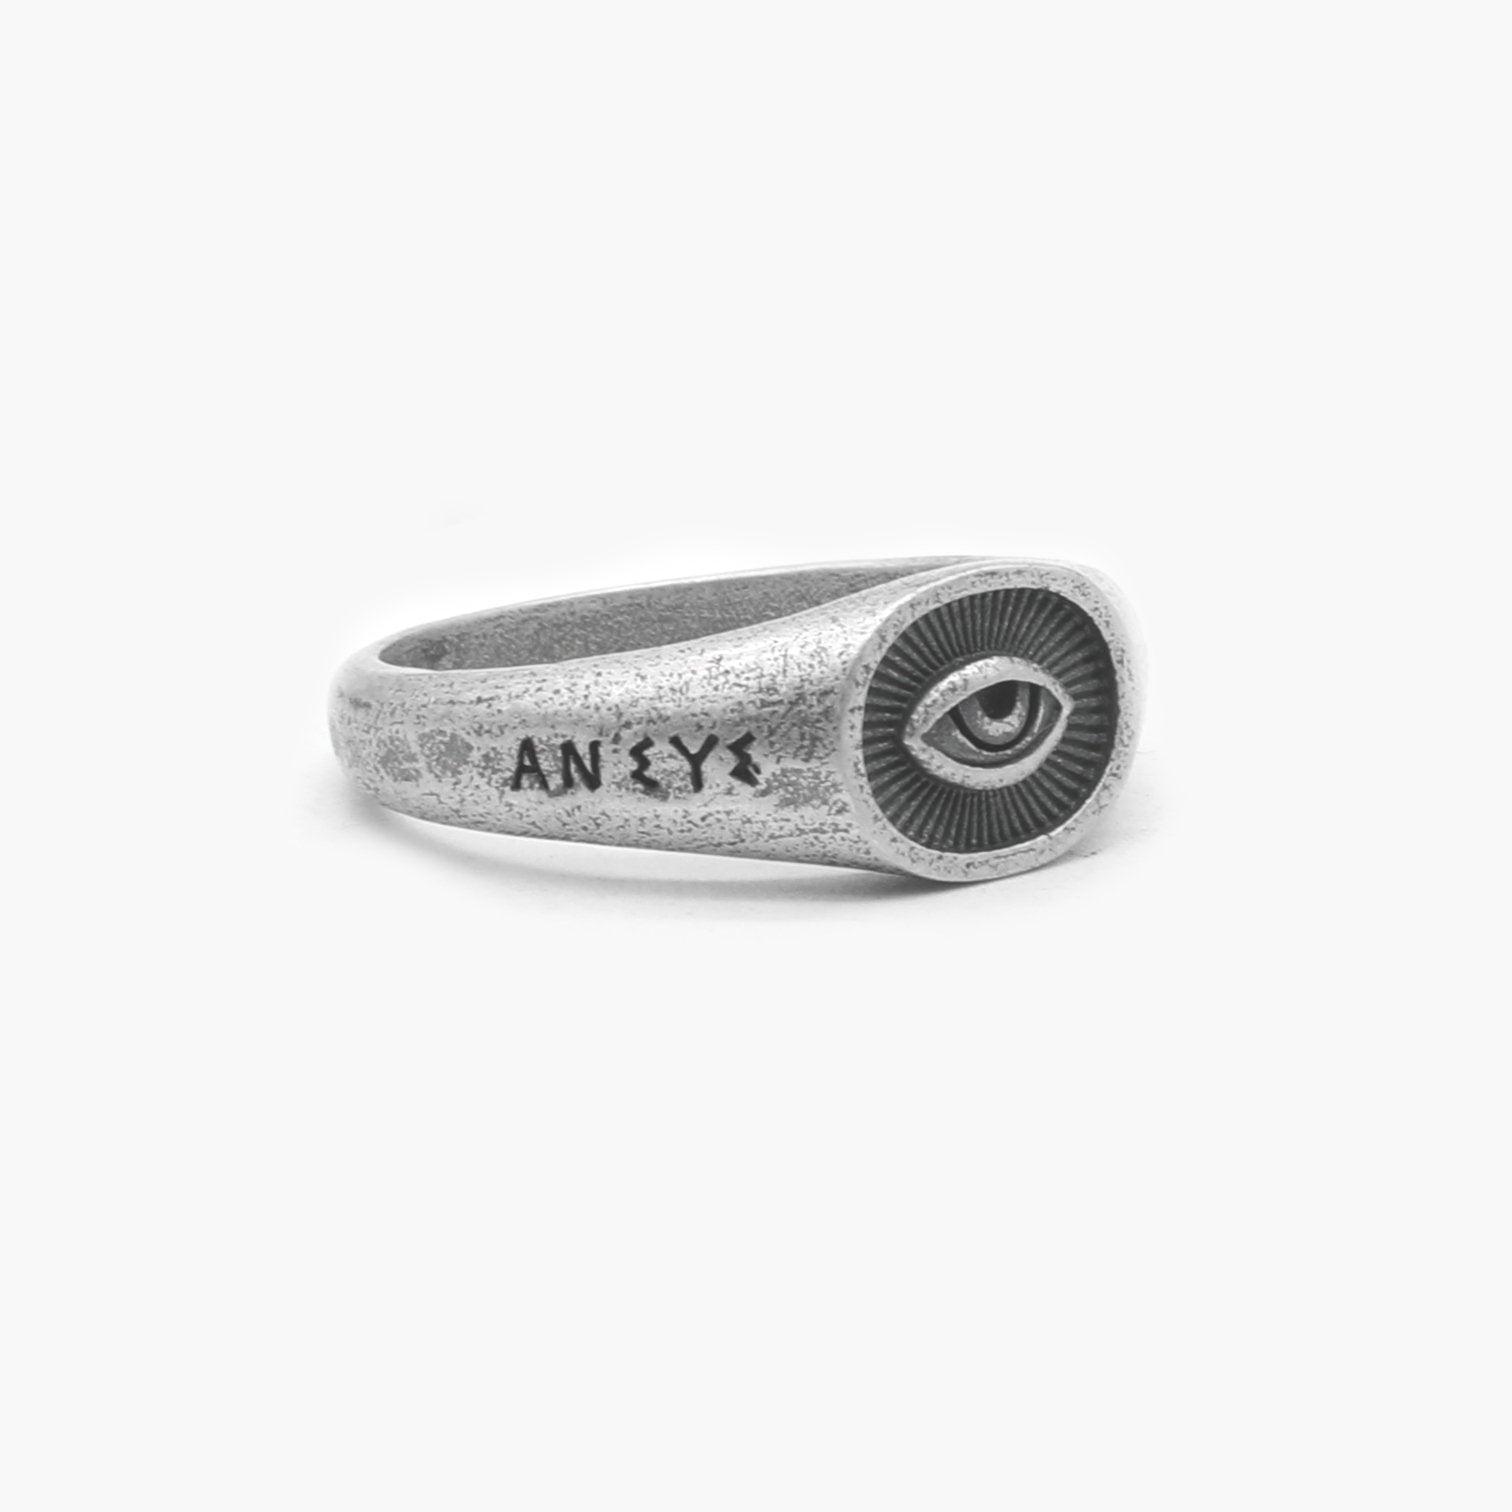 An Eye For An Eye Silver Signet Ring-Ring-Kompsós